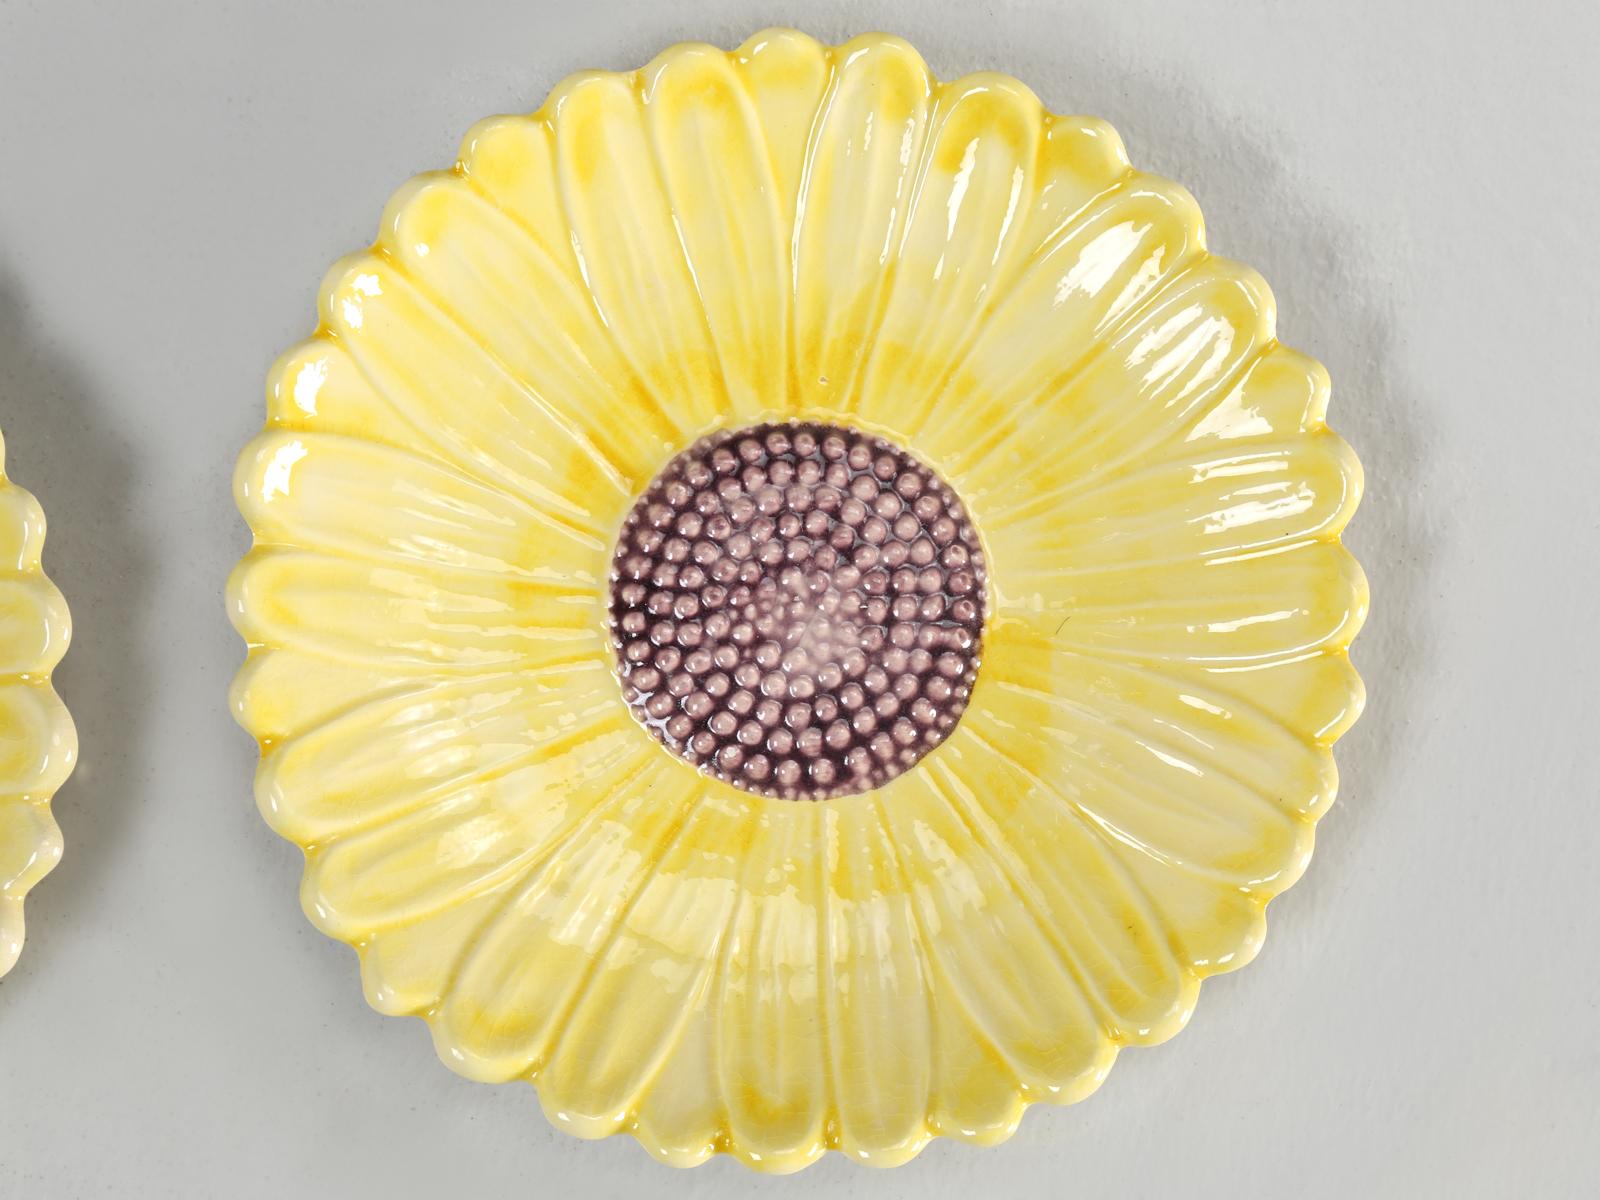 French Majolica Salad or Dessert Plates, Sunflower Pattern 1